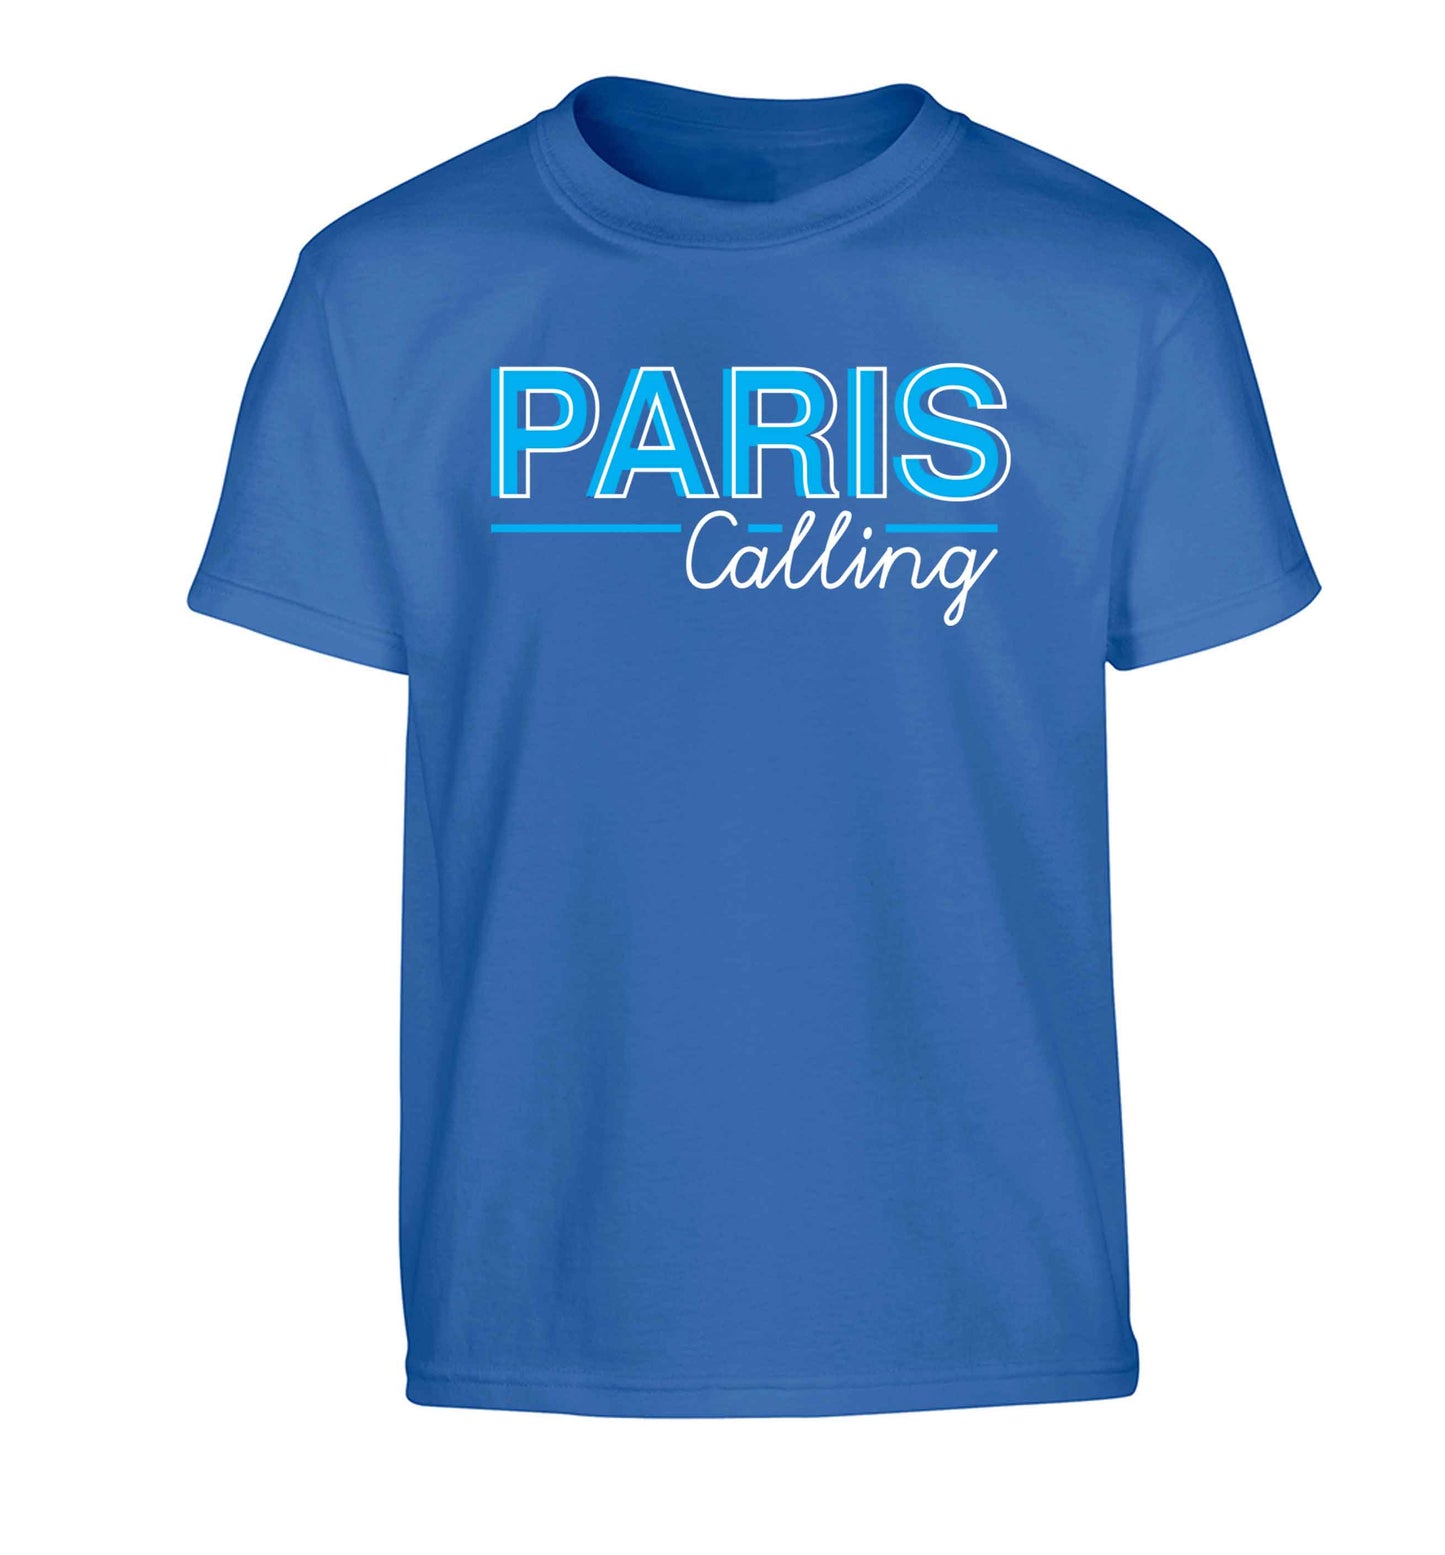 Paris calling Children's blue Tshirt 12-13 Years